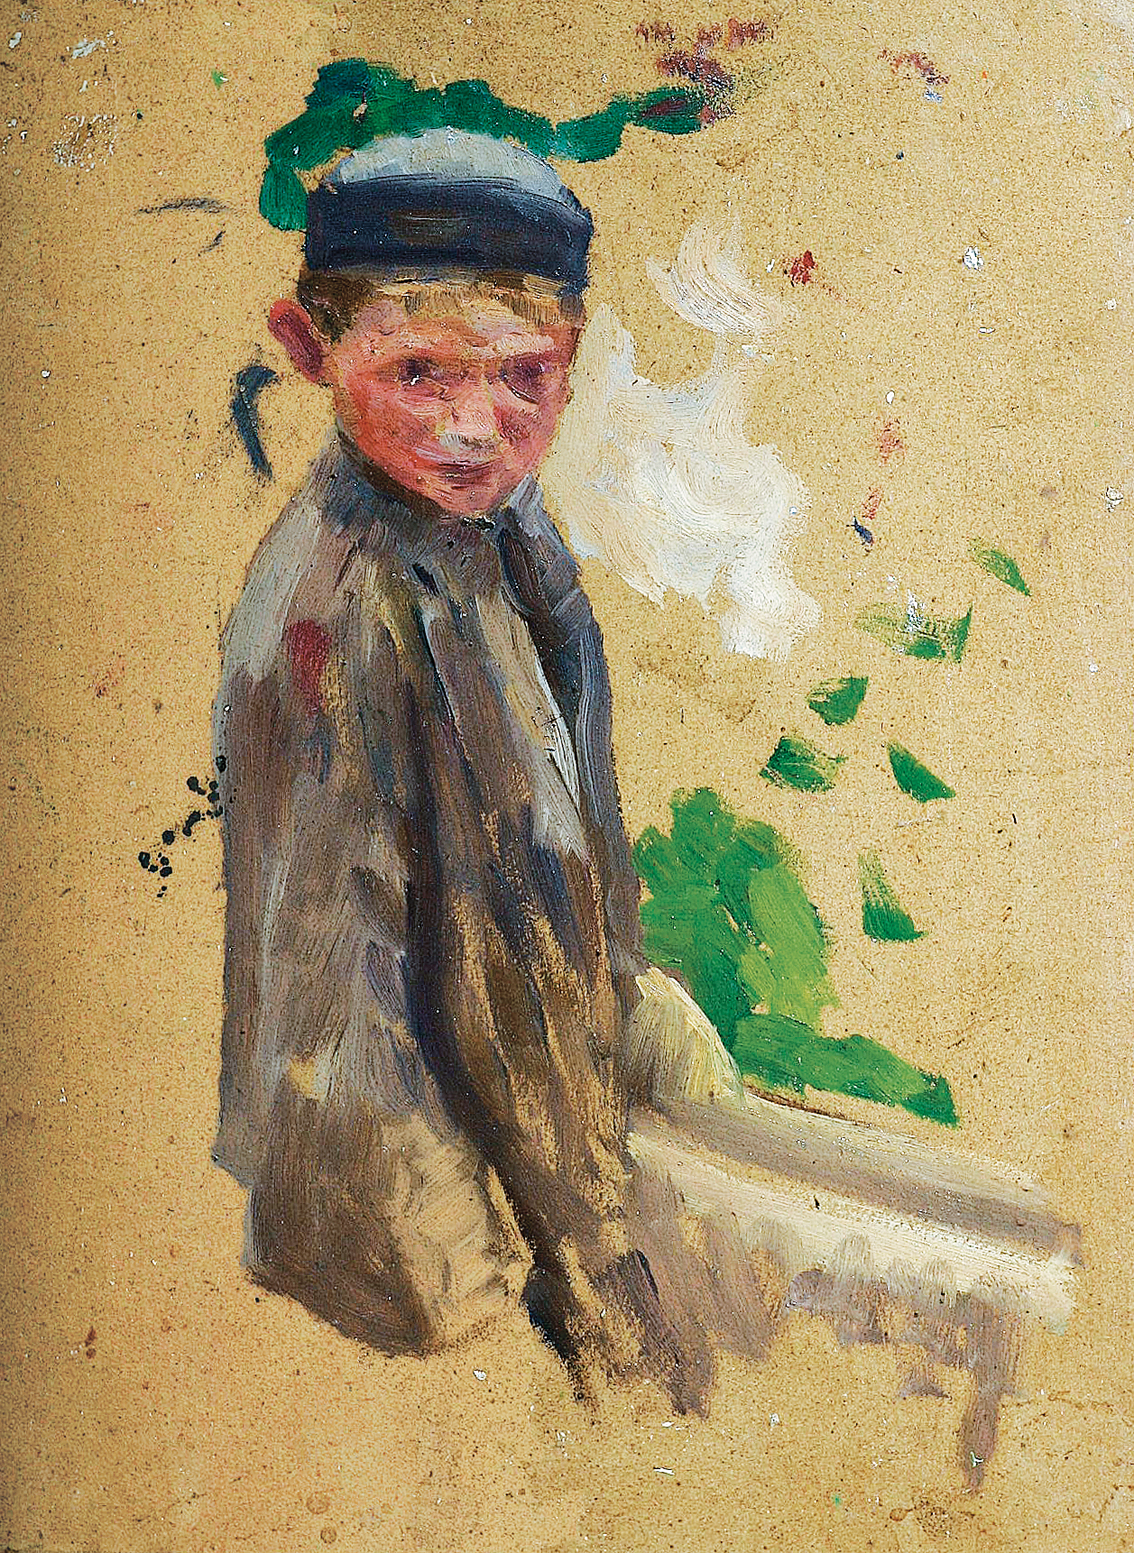 A boy with a cap